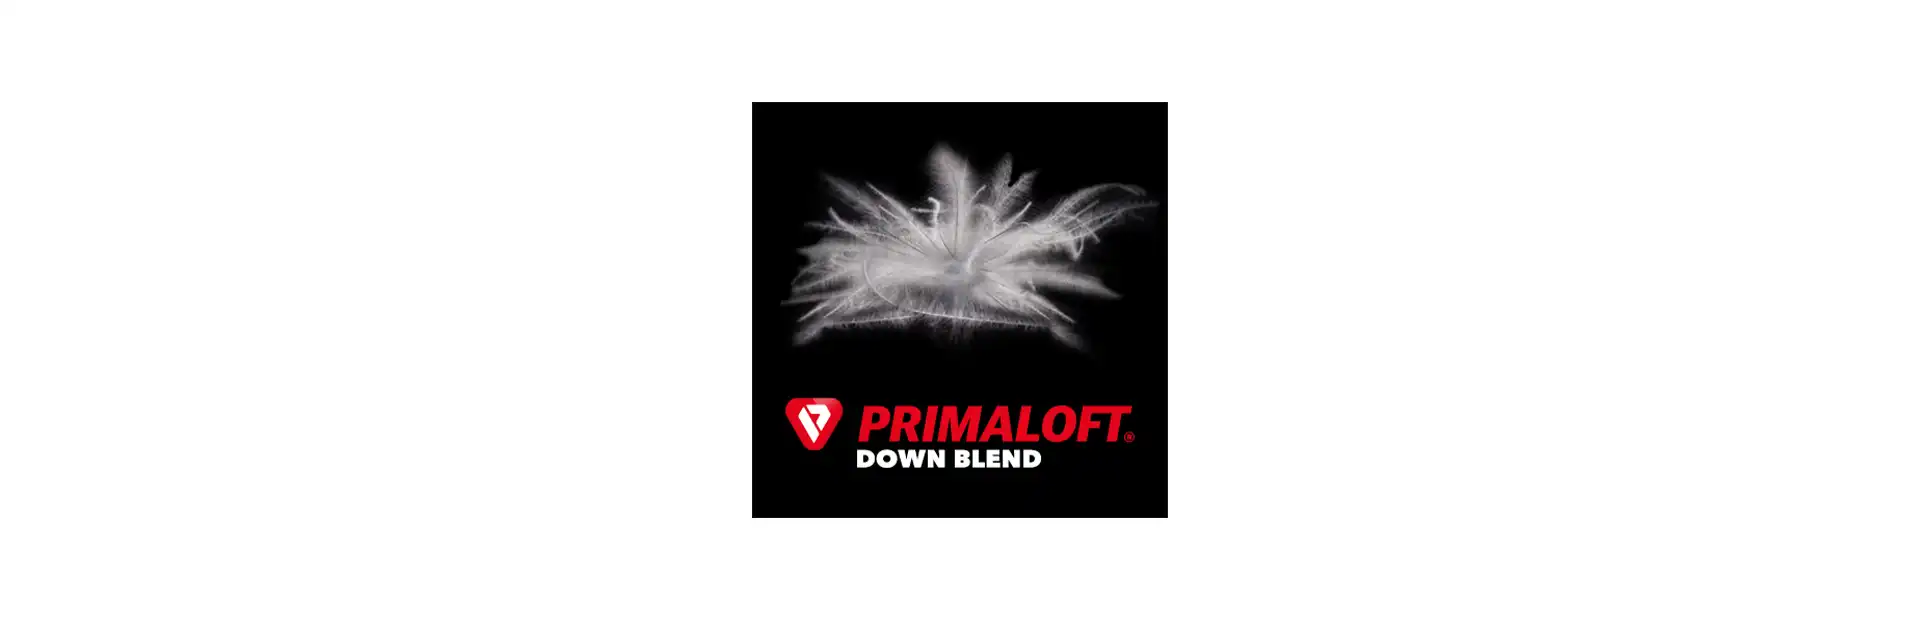 Primaloft® ThermoPlume